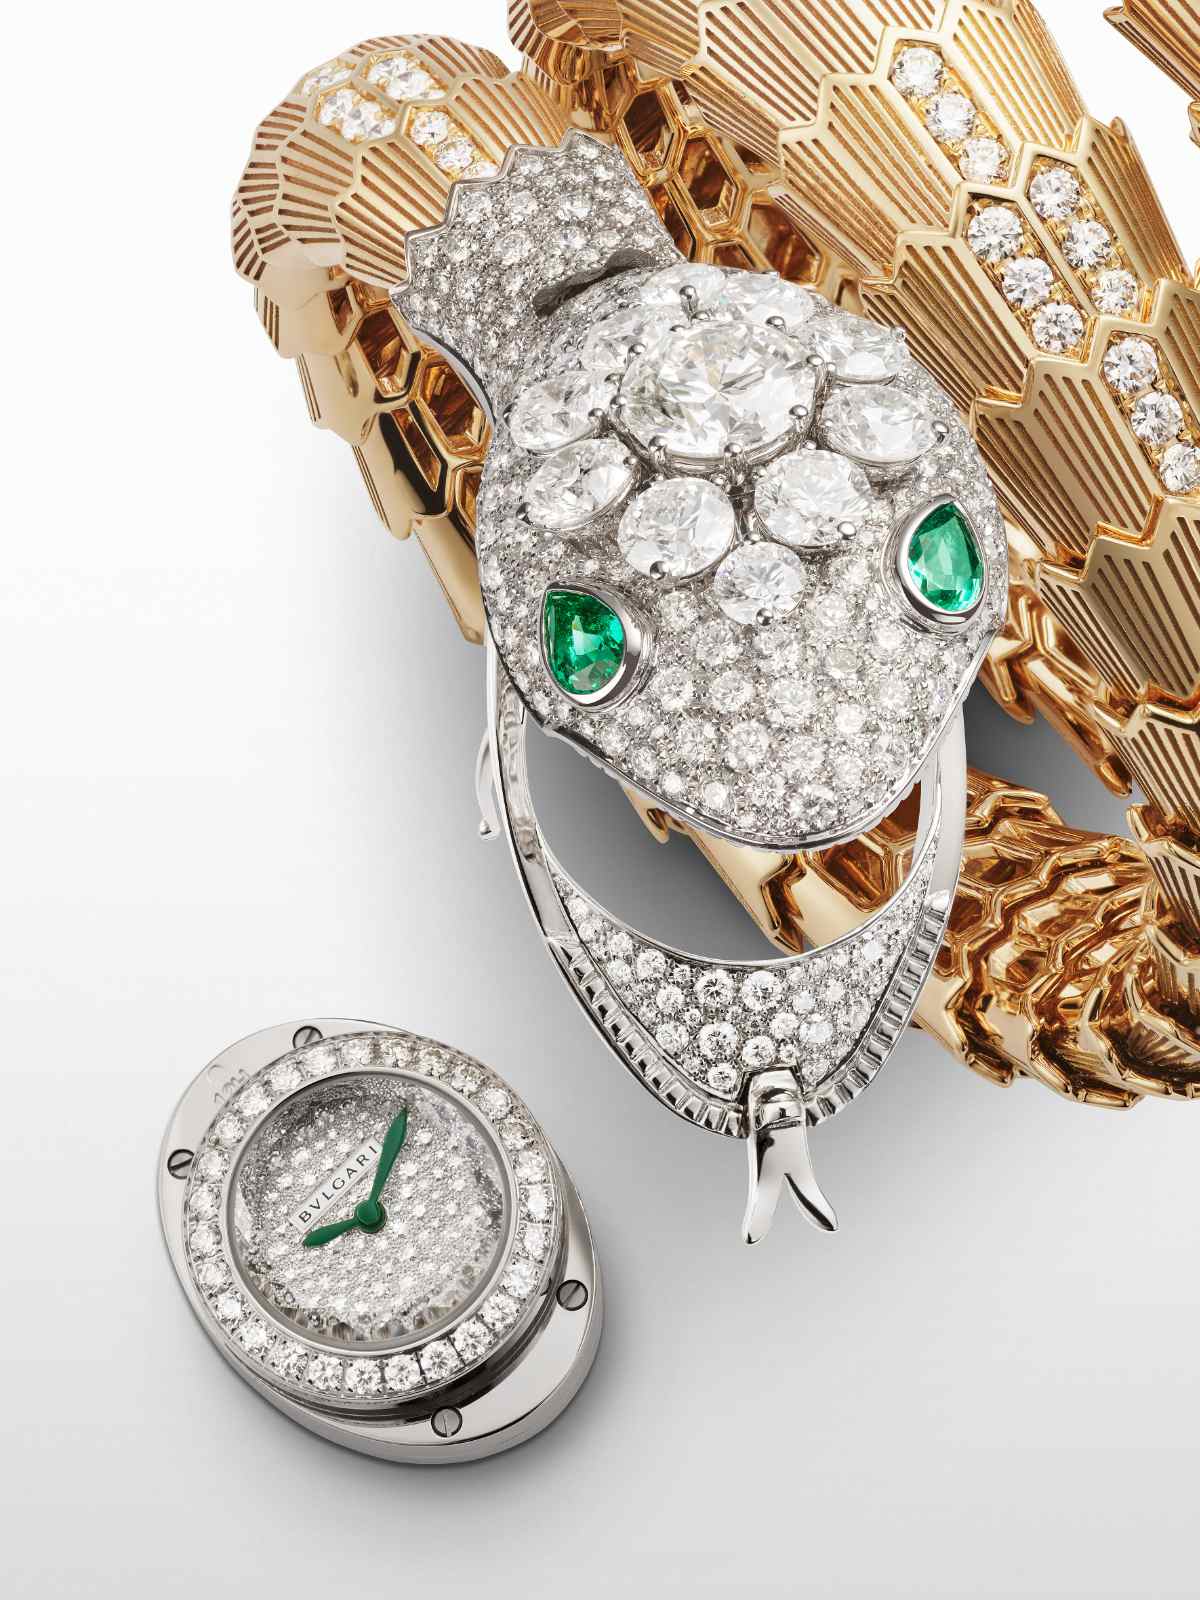 Bulgari's High Jewellery Secret Watches